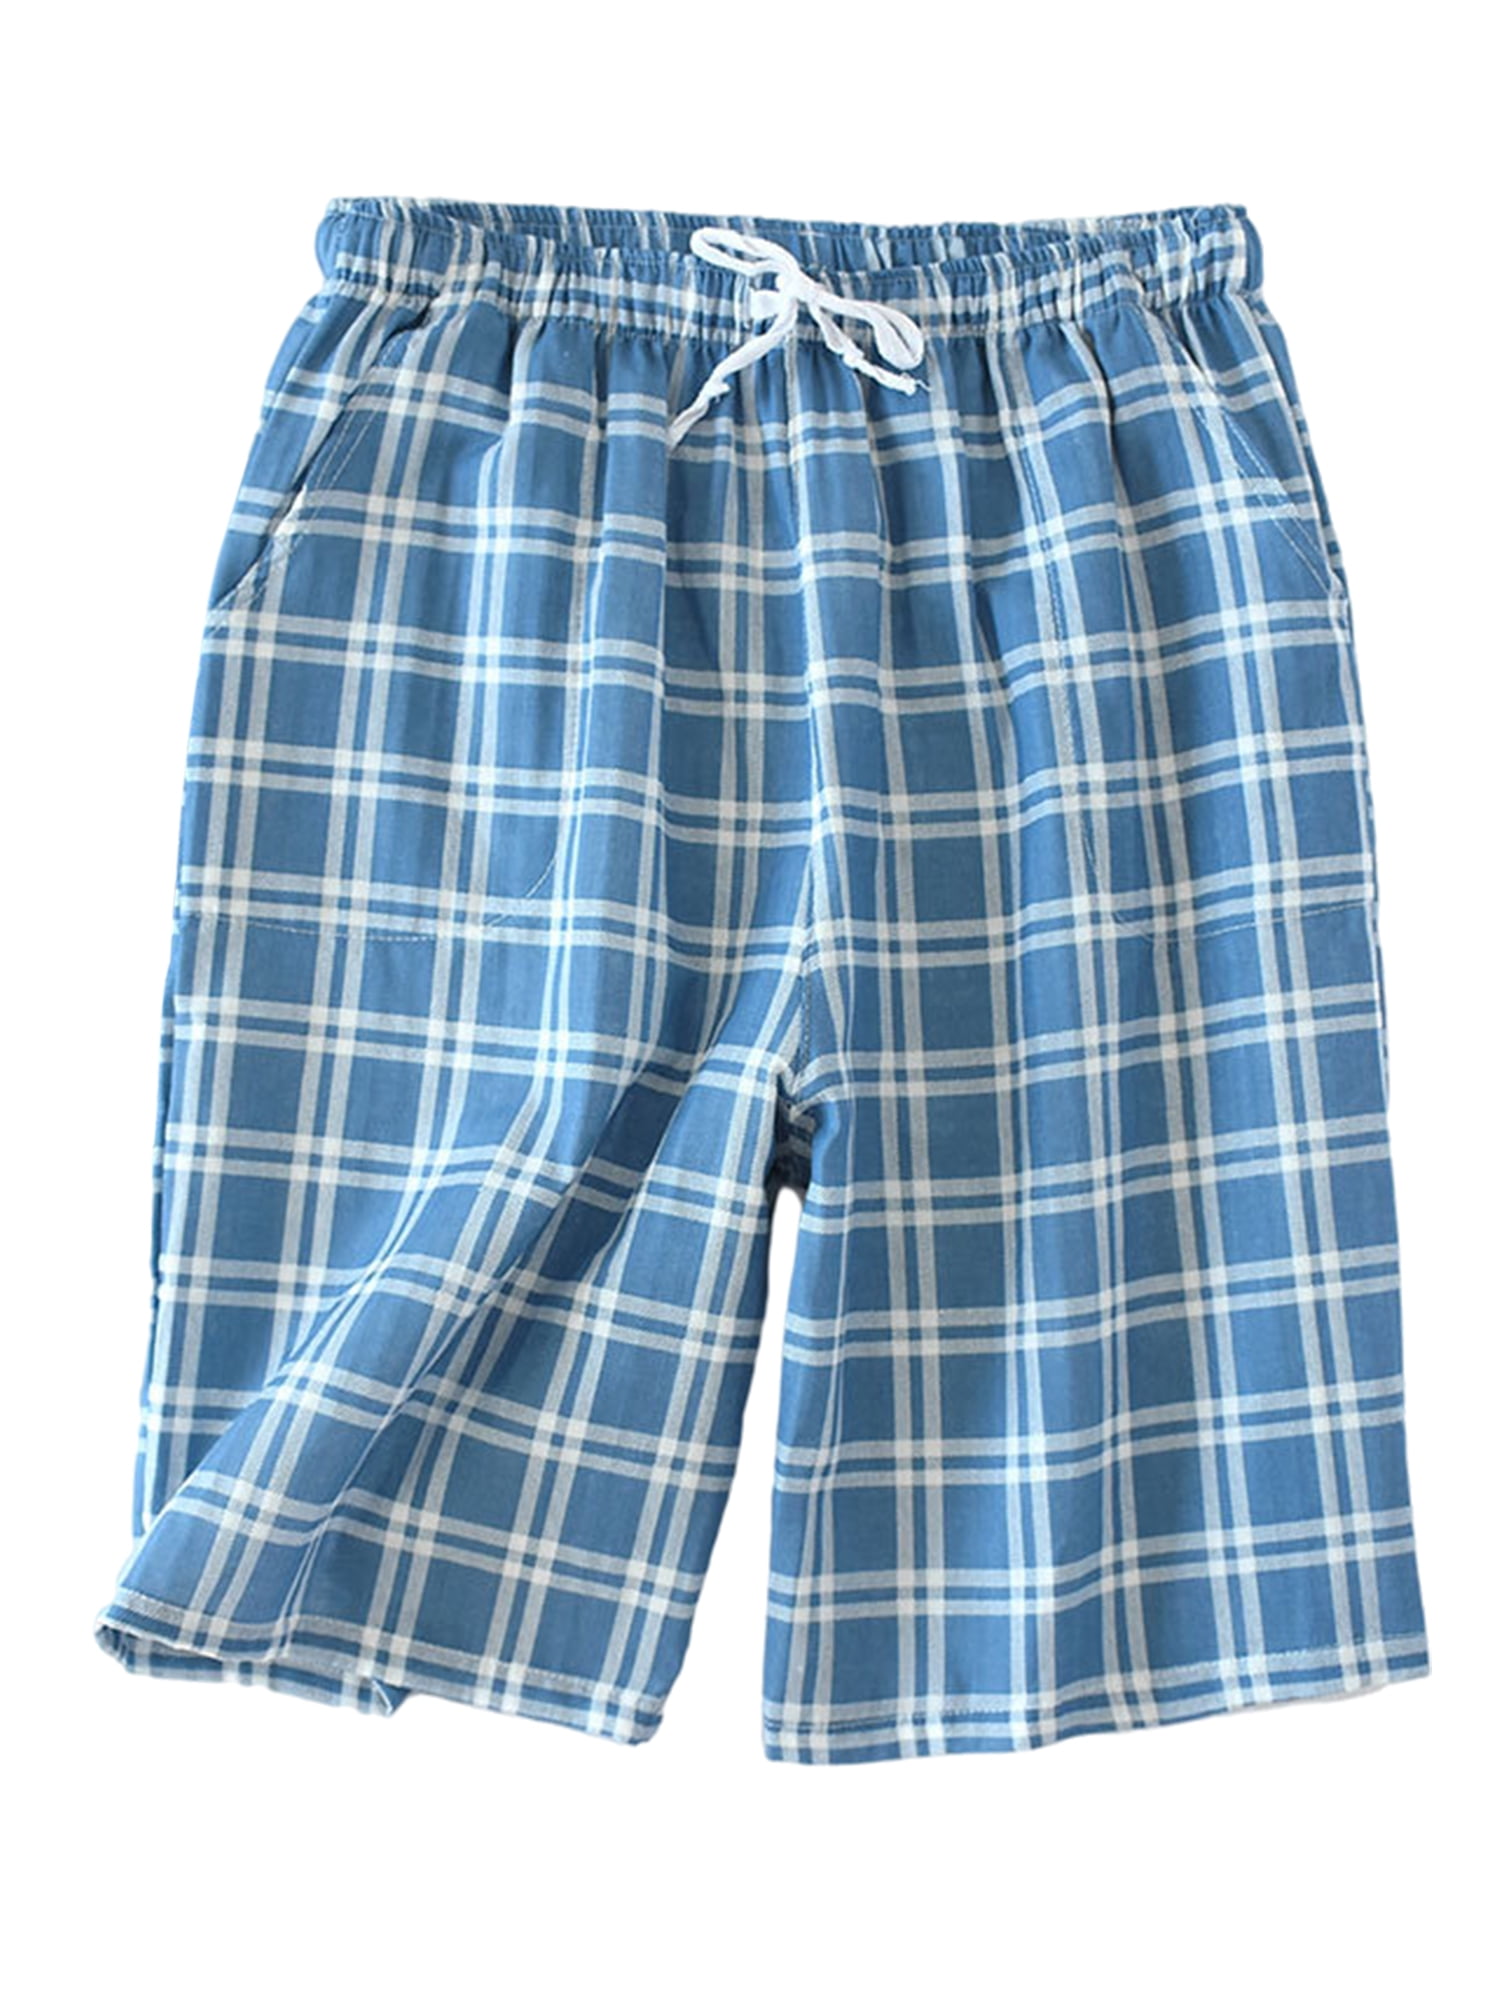 Men’s Pajama Shorts Man Plaid Sleep Shorts Cotton Boxer Lounge Shorts with Pockets 